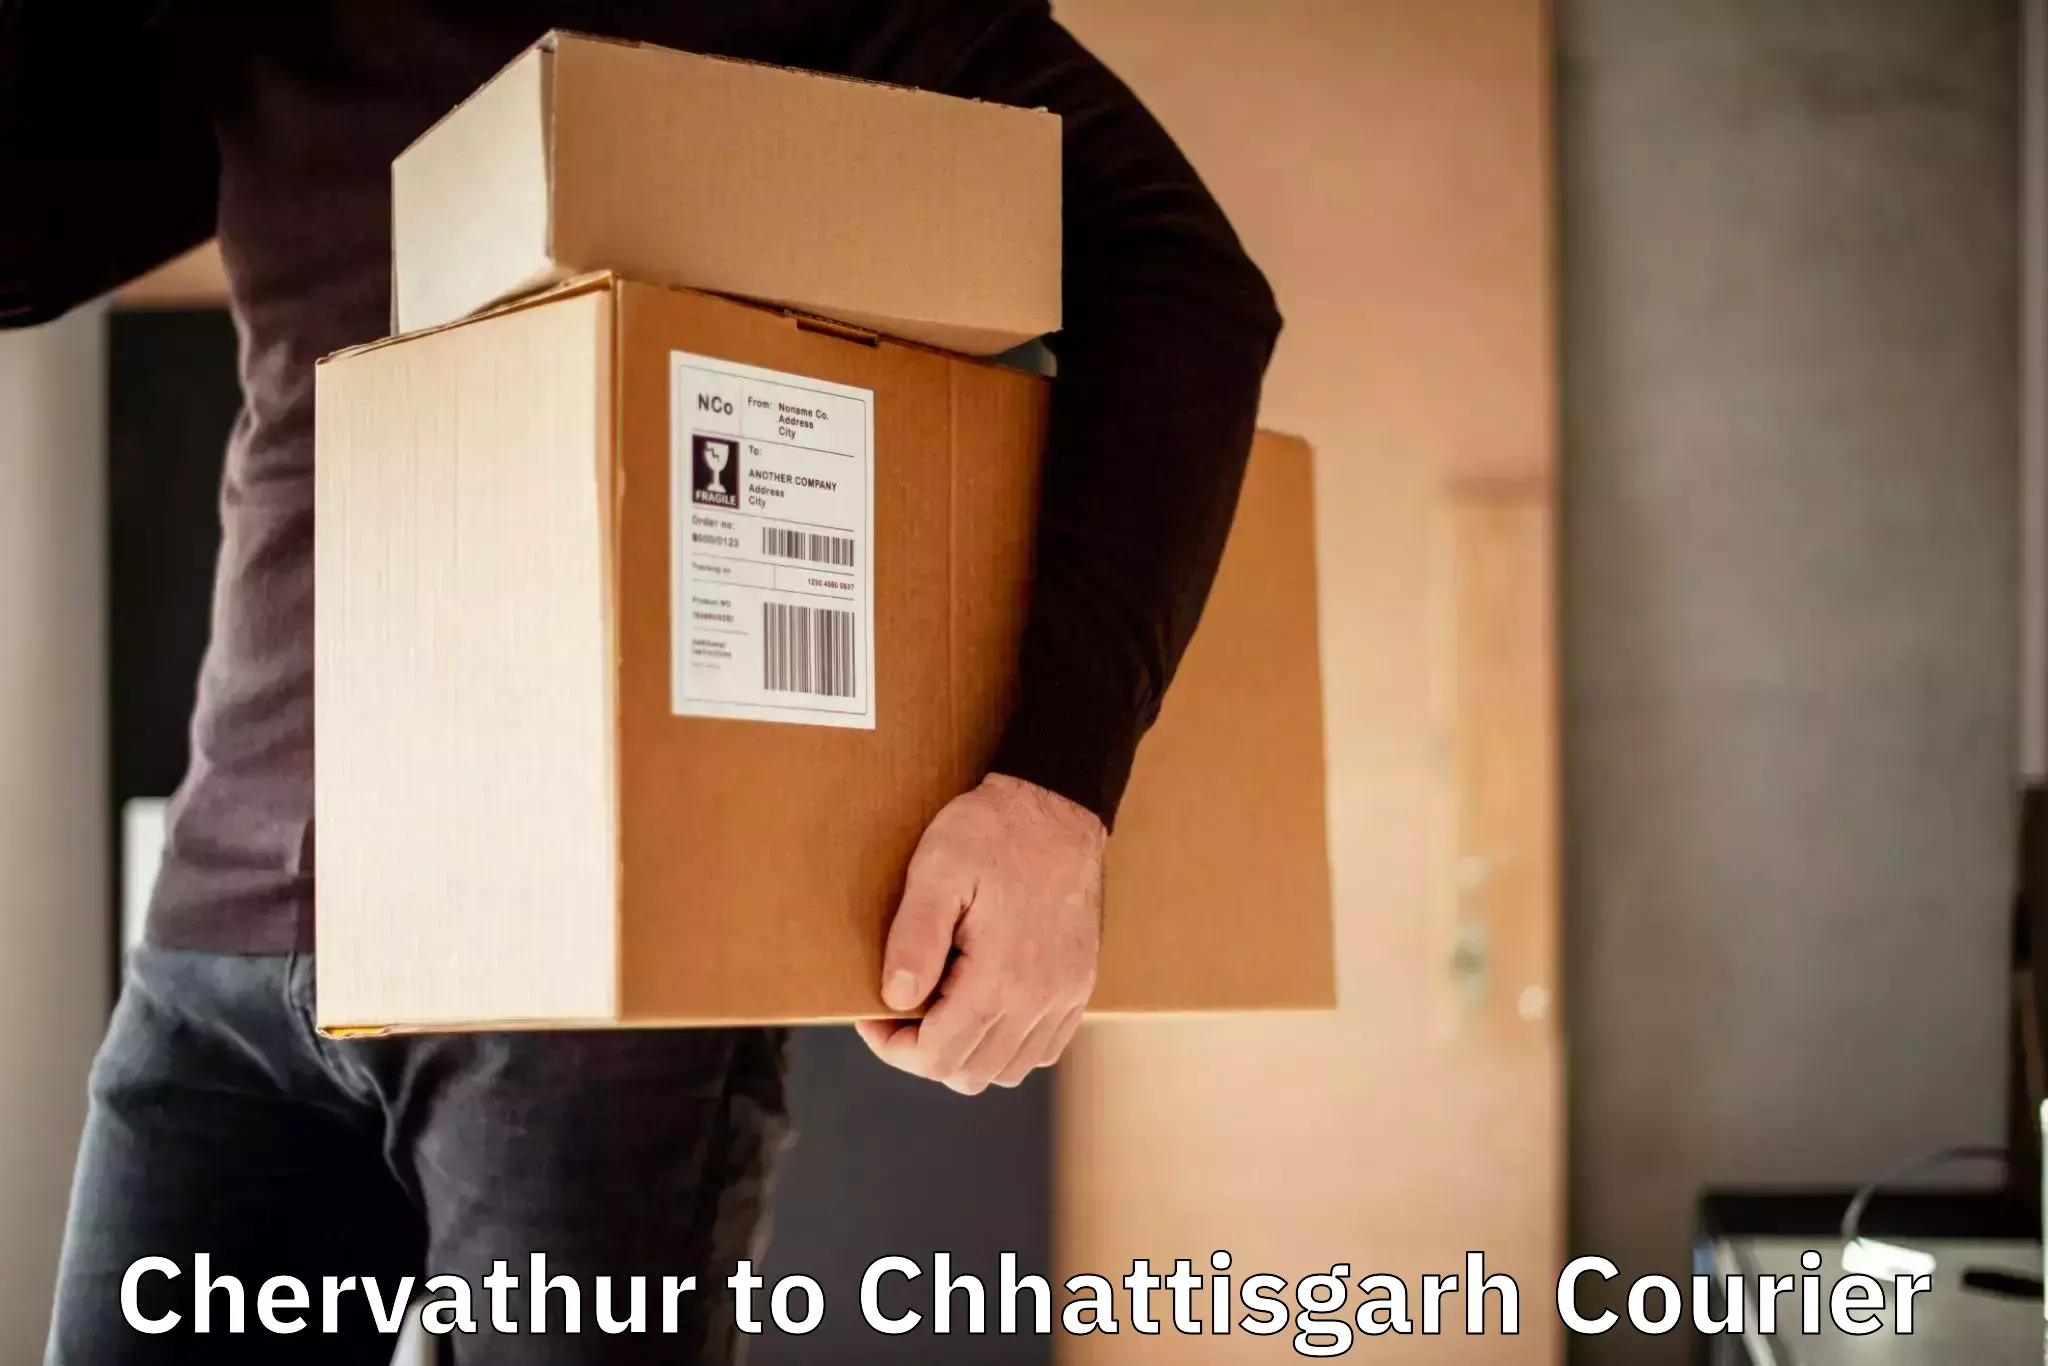 Fast shipping solutions Chervathur to Korea Chhattisgarh